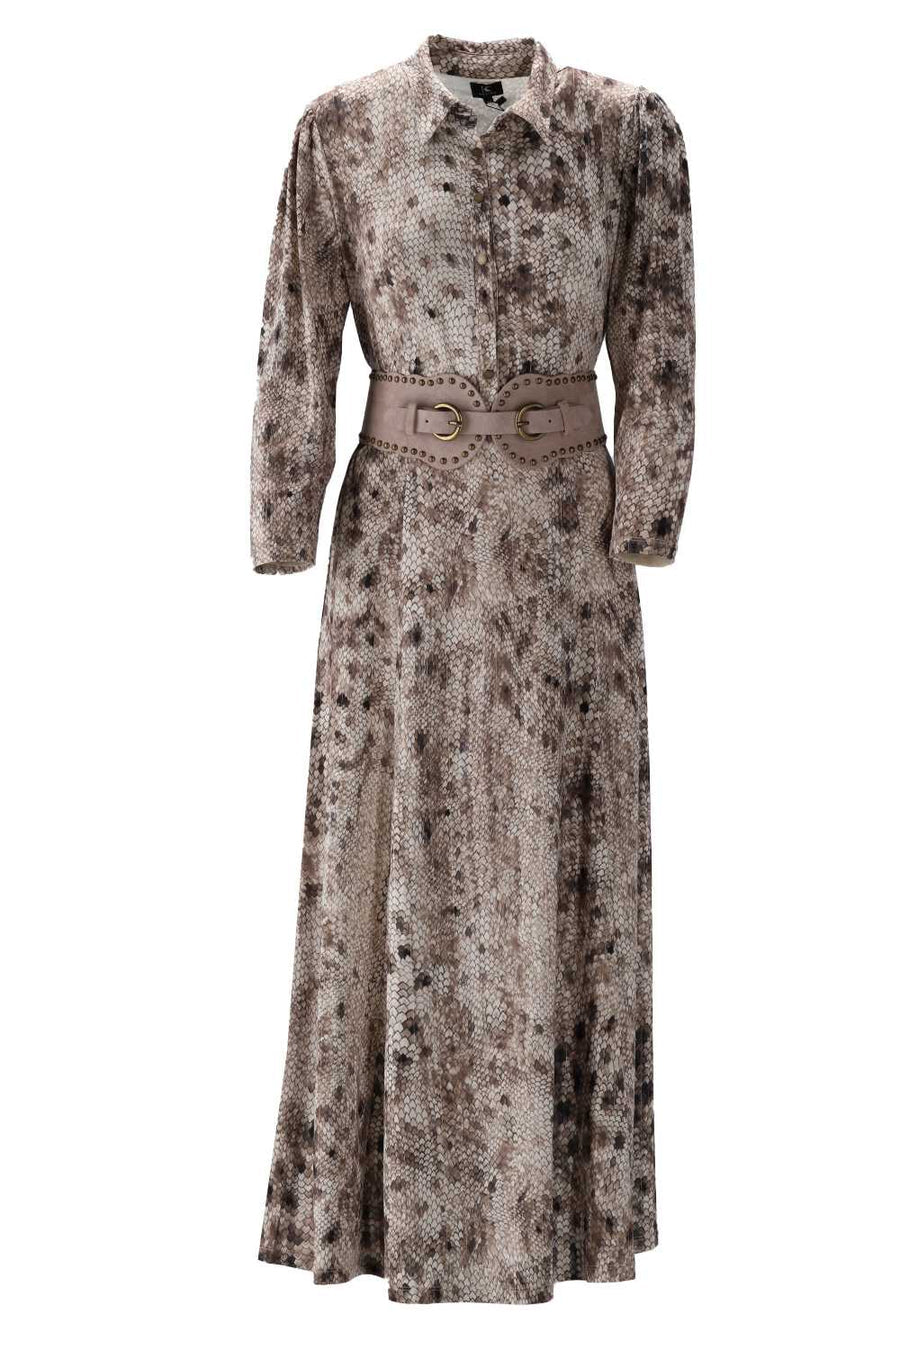 K-Design - Long dress, snake print, matching belt (V122)